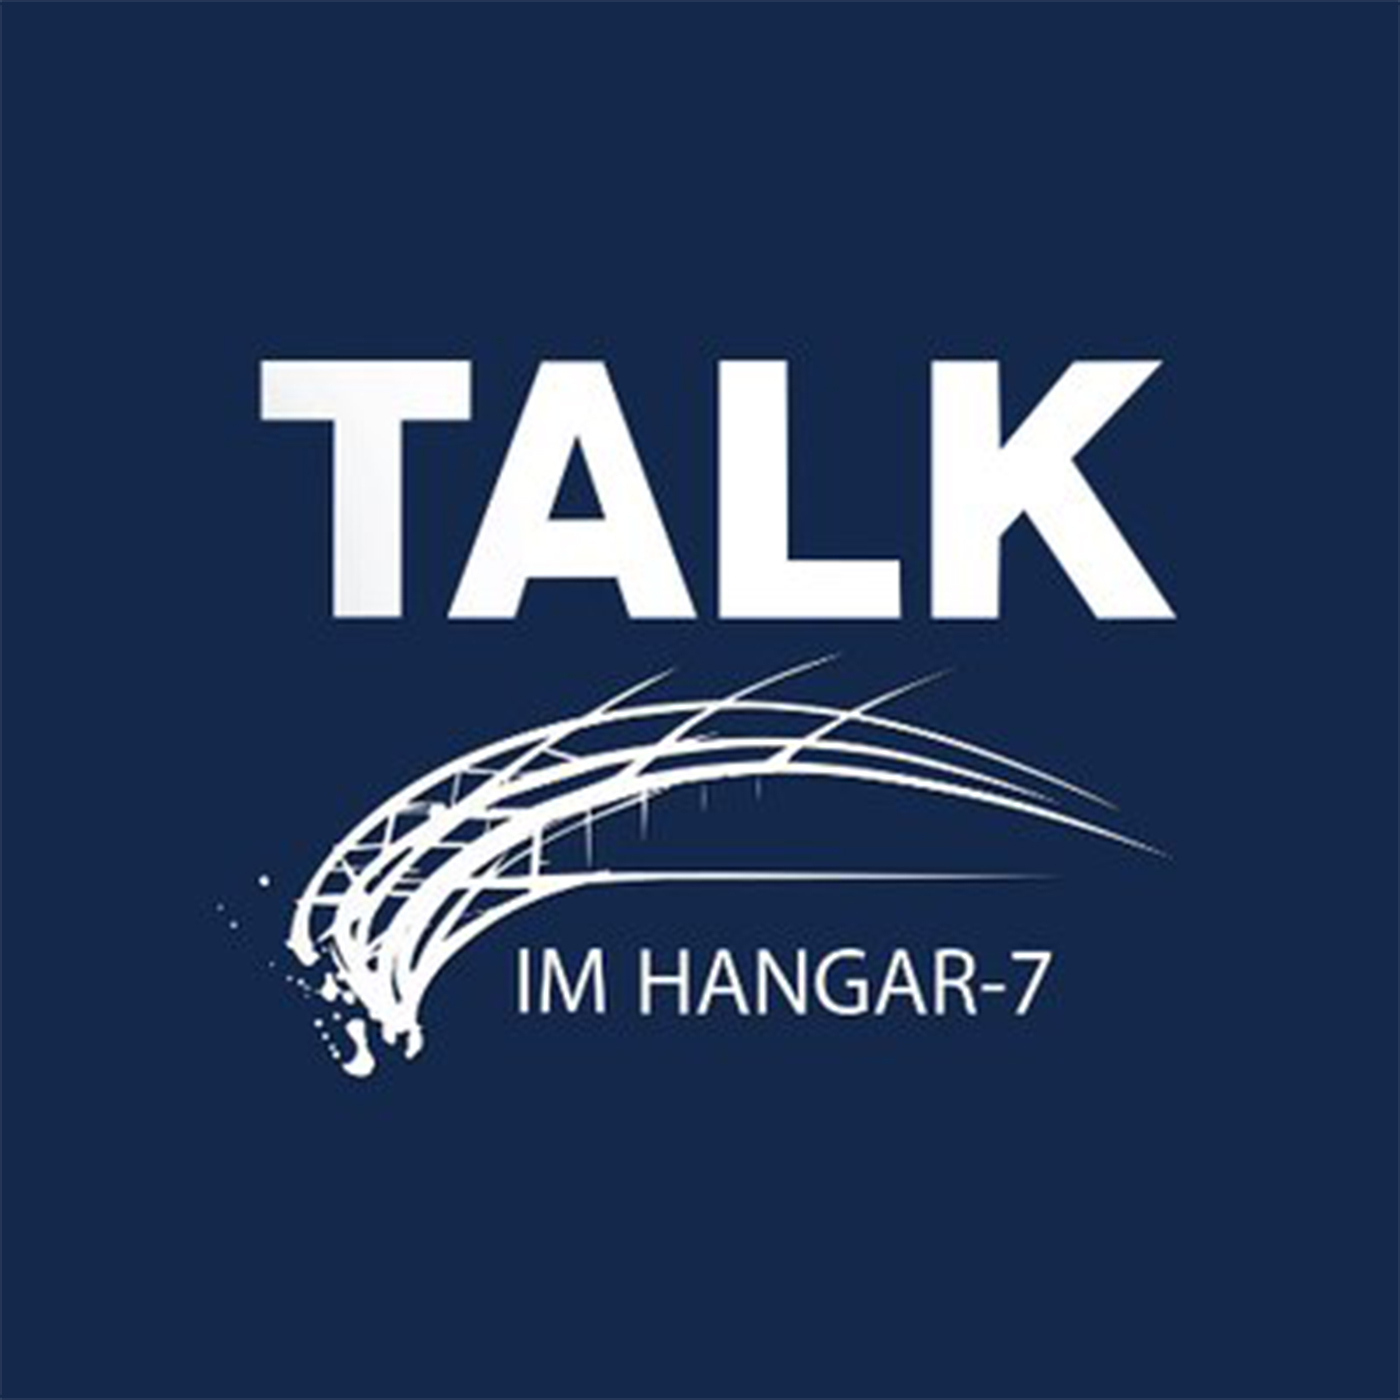 Talk im Hangar-7: Trans, inter, divers: Auslaufmodell Mann und Frau?